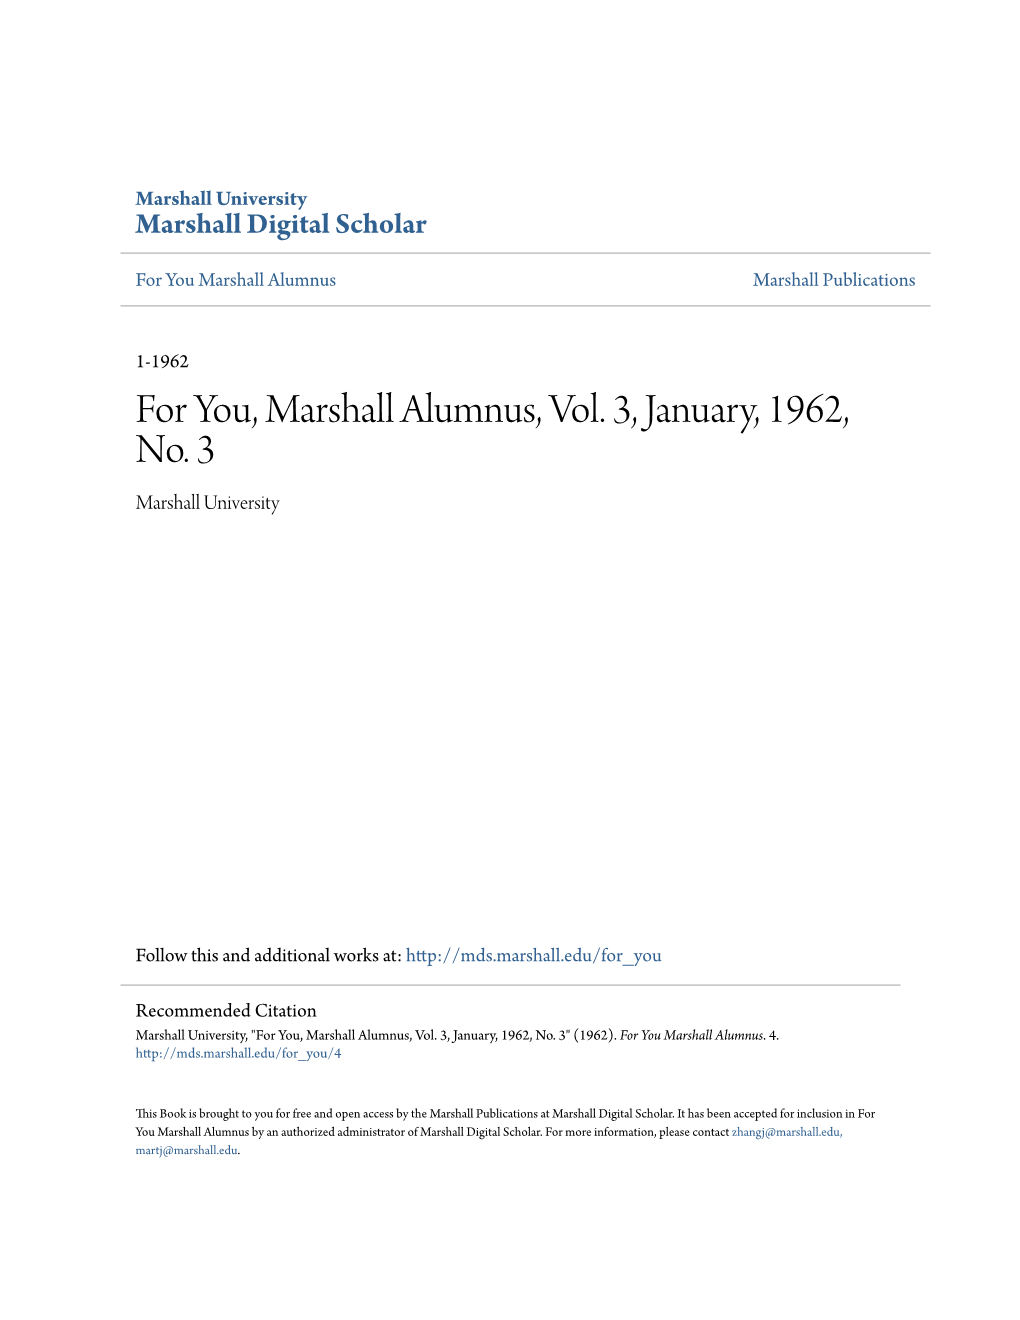 For You, Marshall Alumnus, Vol. 3, January, 1962, No. 3 Marshall University